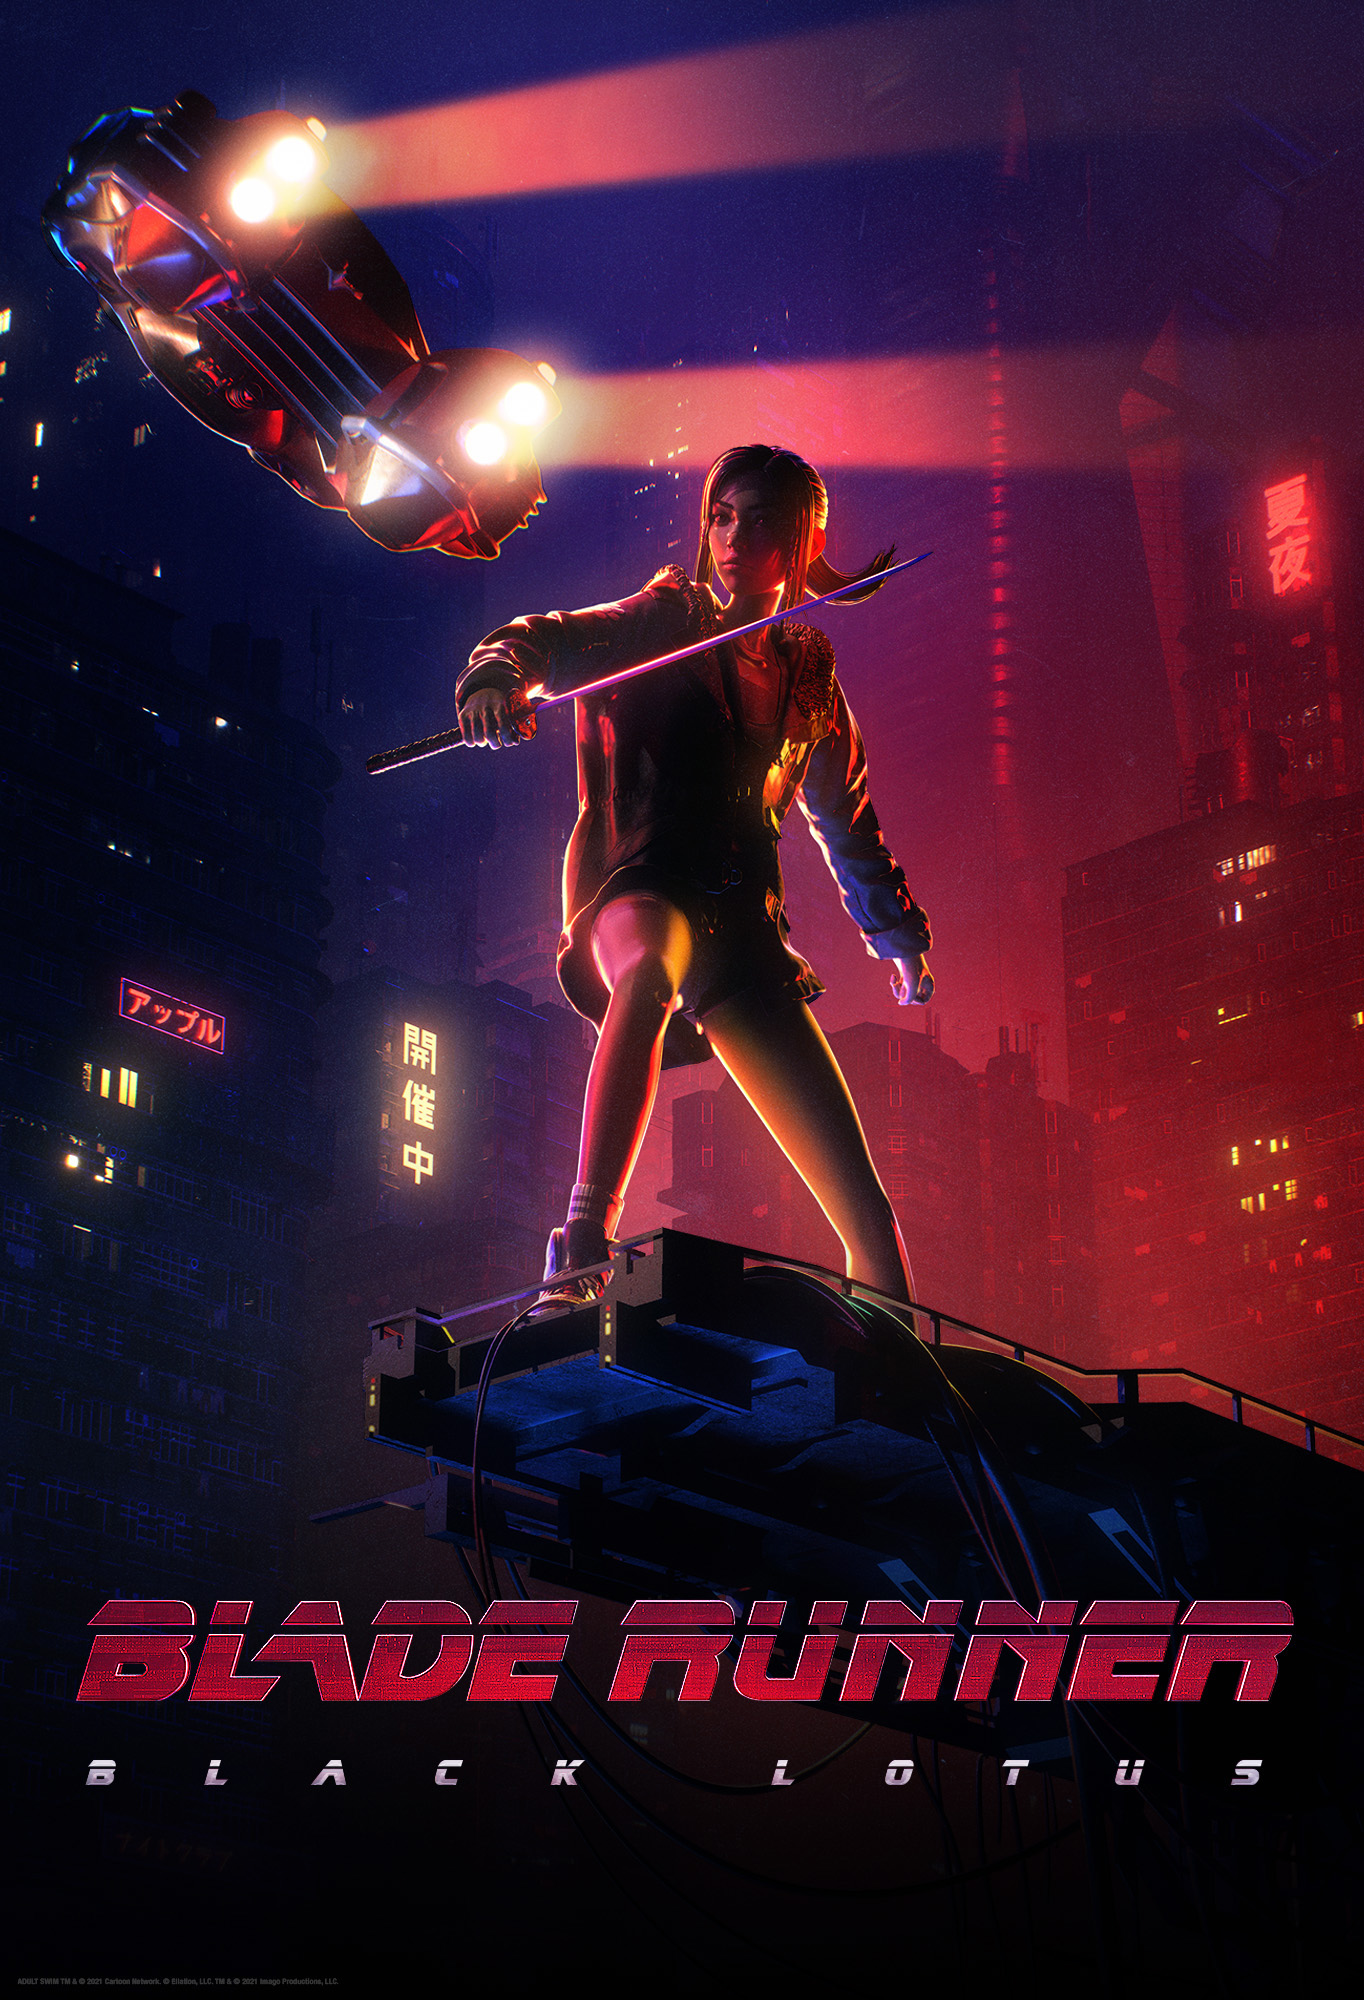 Blade Runner Black Lotus poster key art